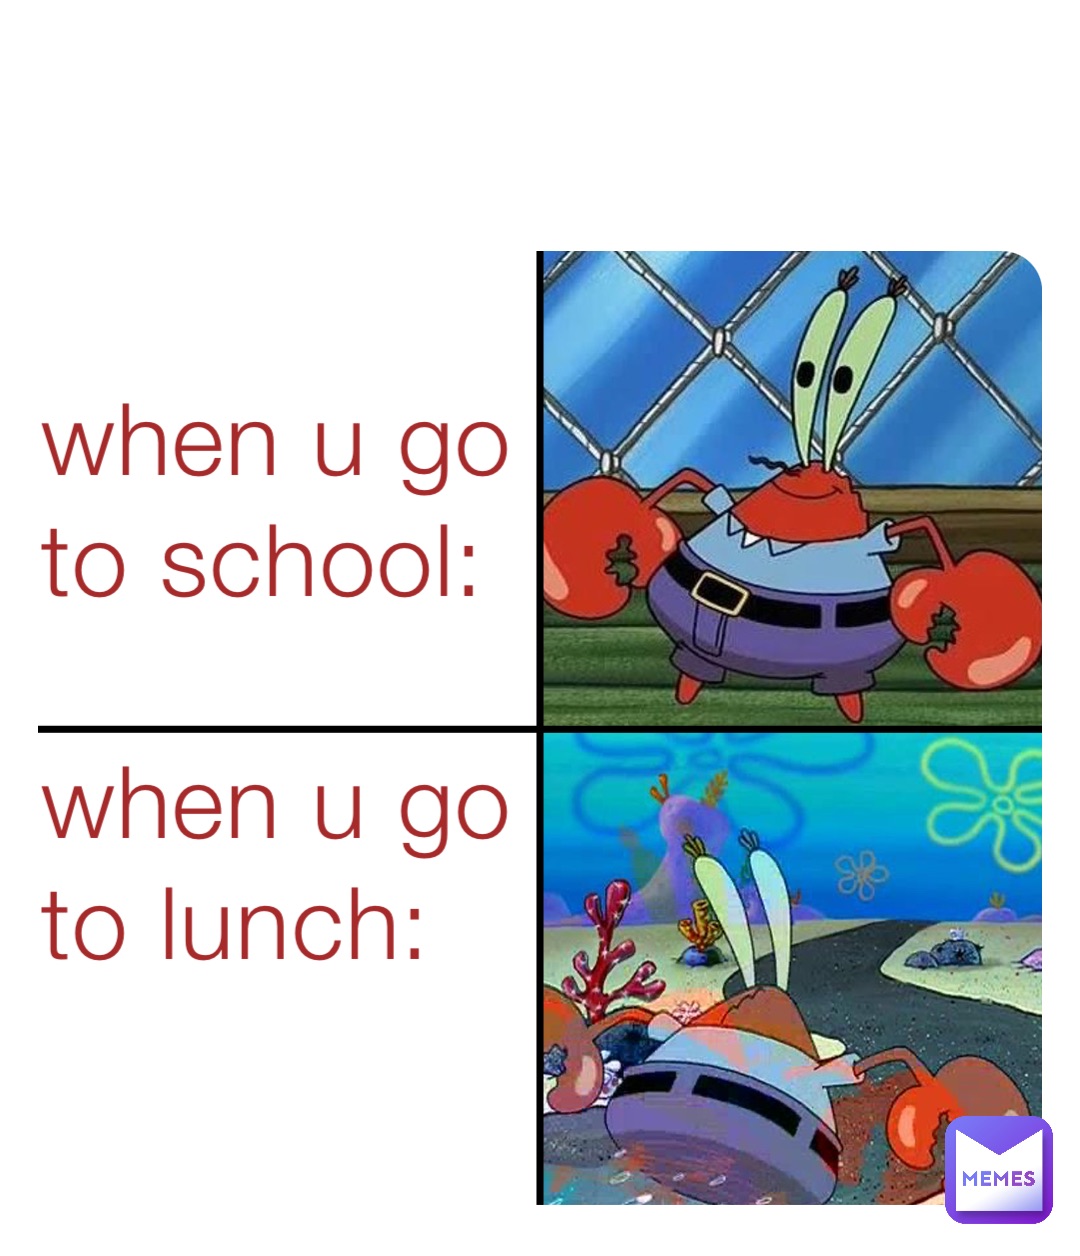 when u go to school:

when u go to lunch: